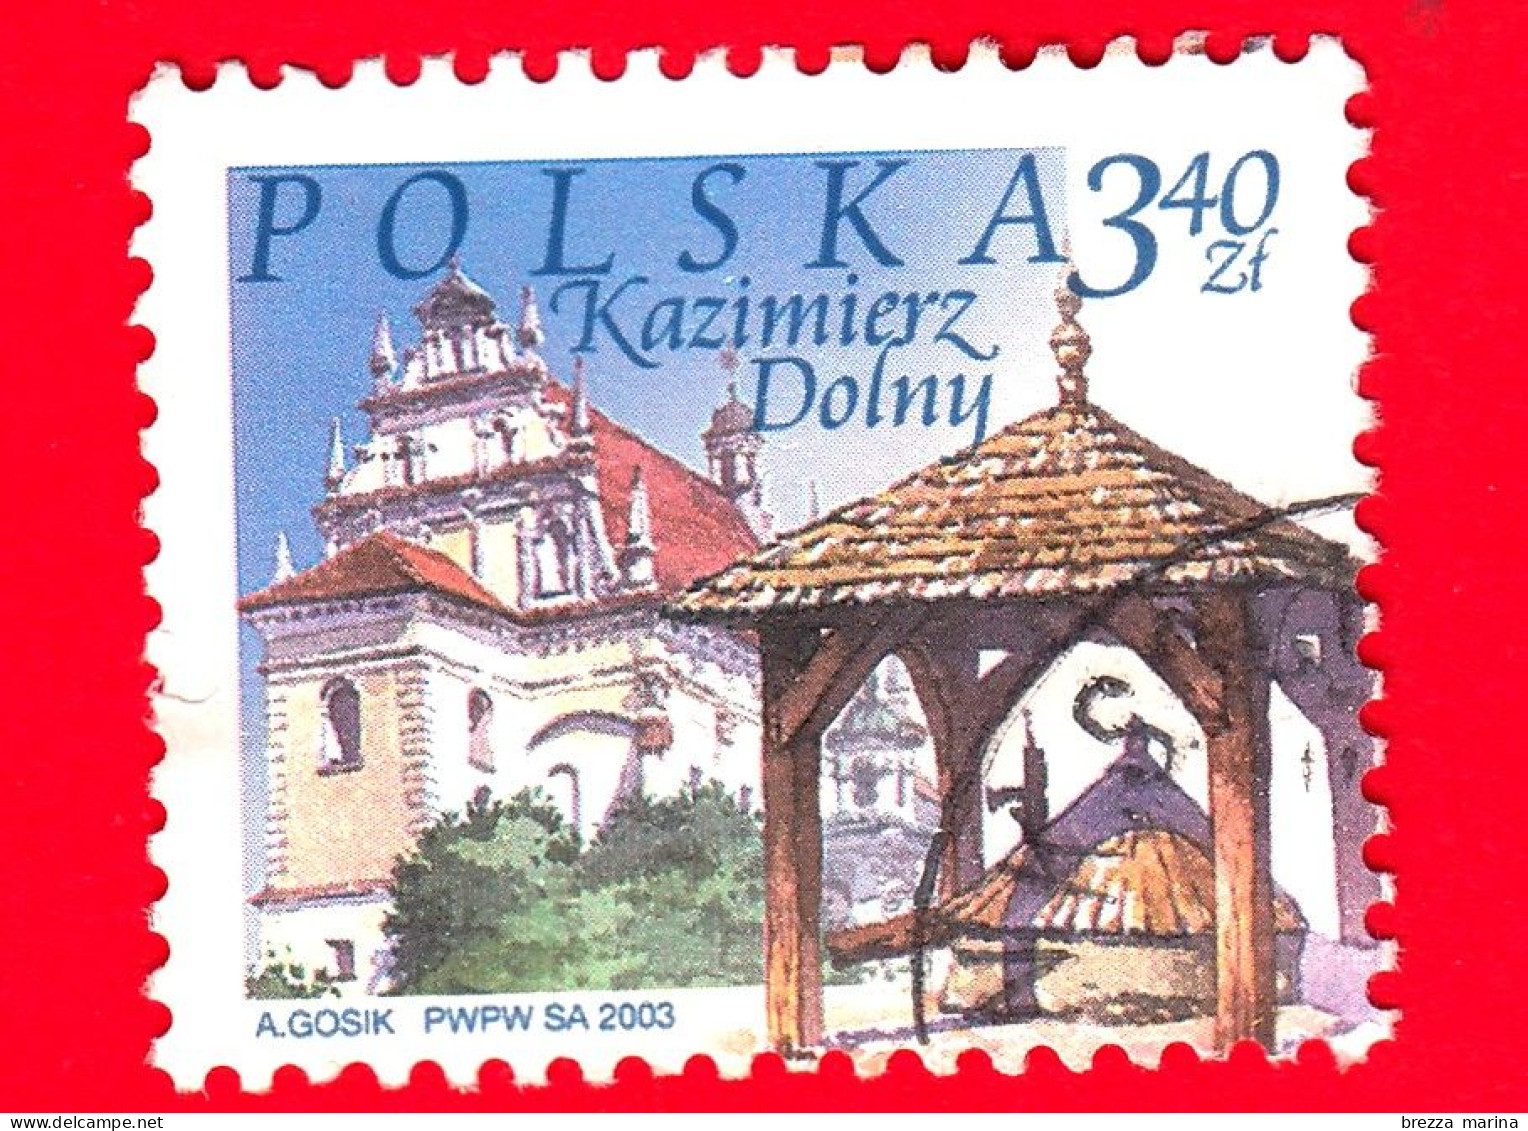 POLONIA - Usato - 2003 - Luoghi D'interesse Di Città Polacche - Chiesa E Pozzo, Kazimierz Dolny - 3.40 - Usados